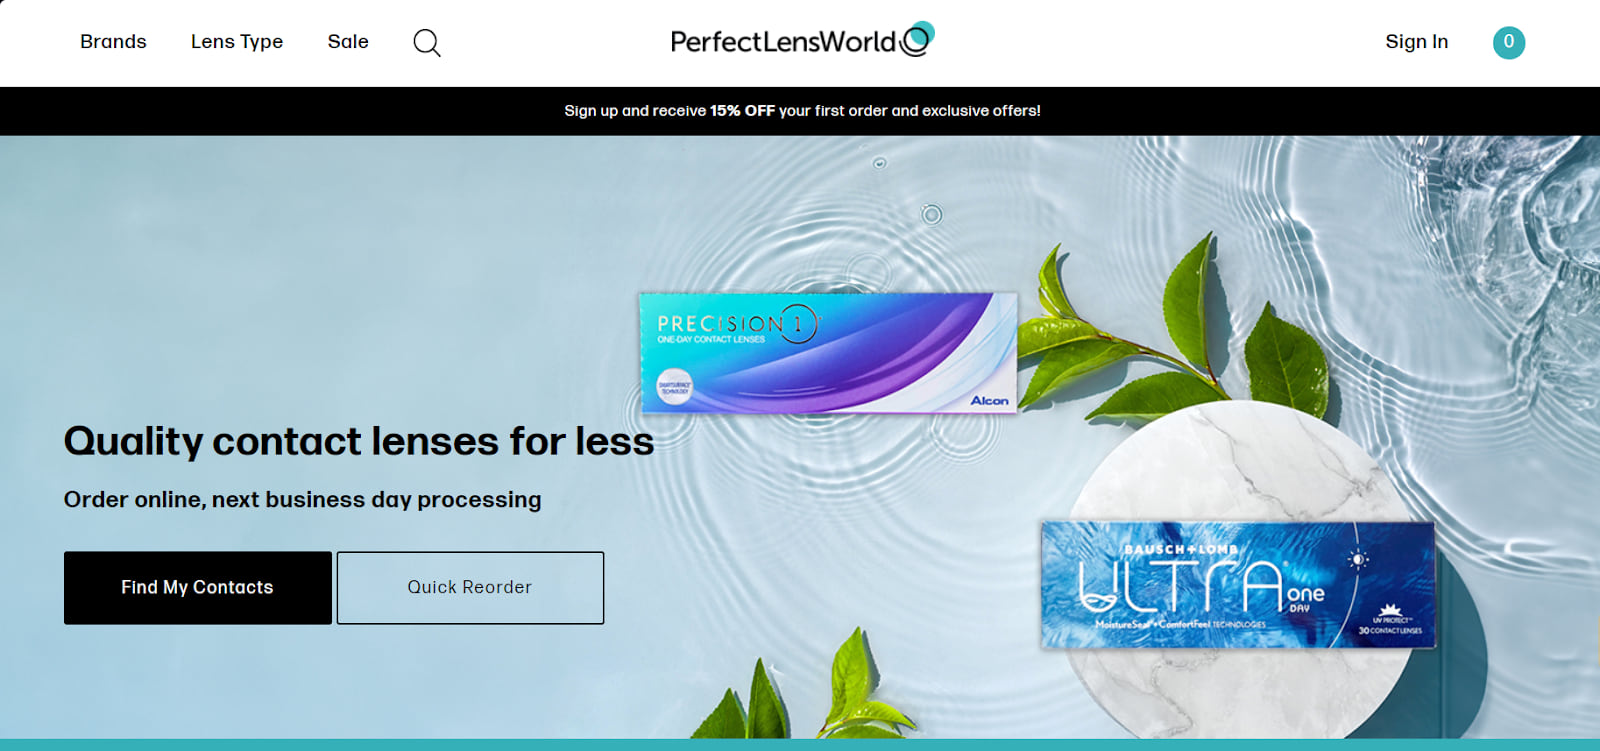 is-perfectlensworld-legit-1